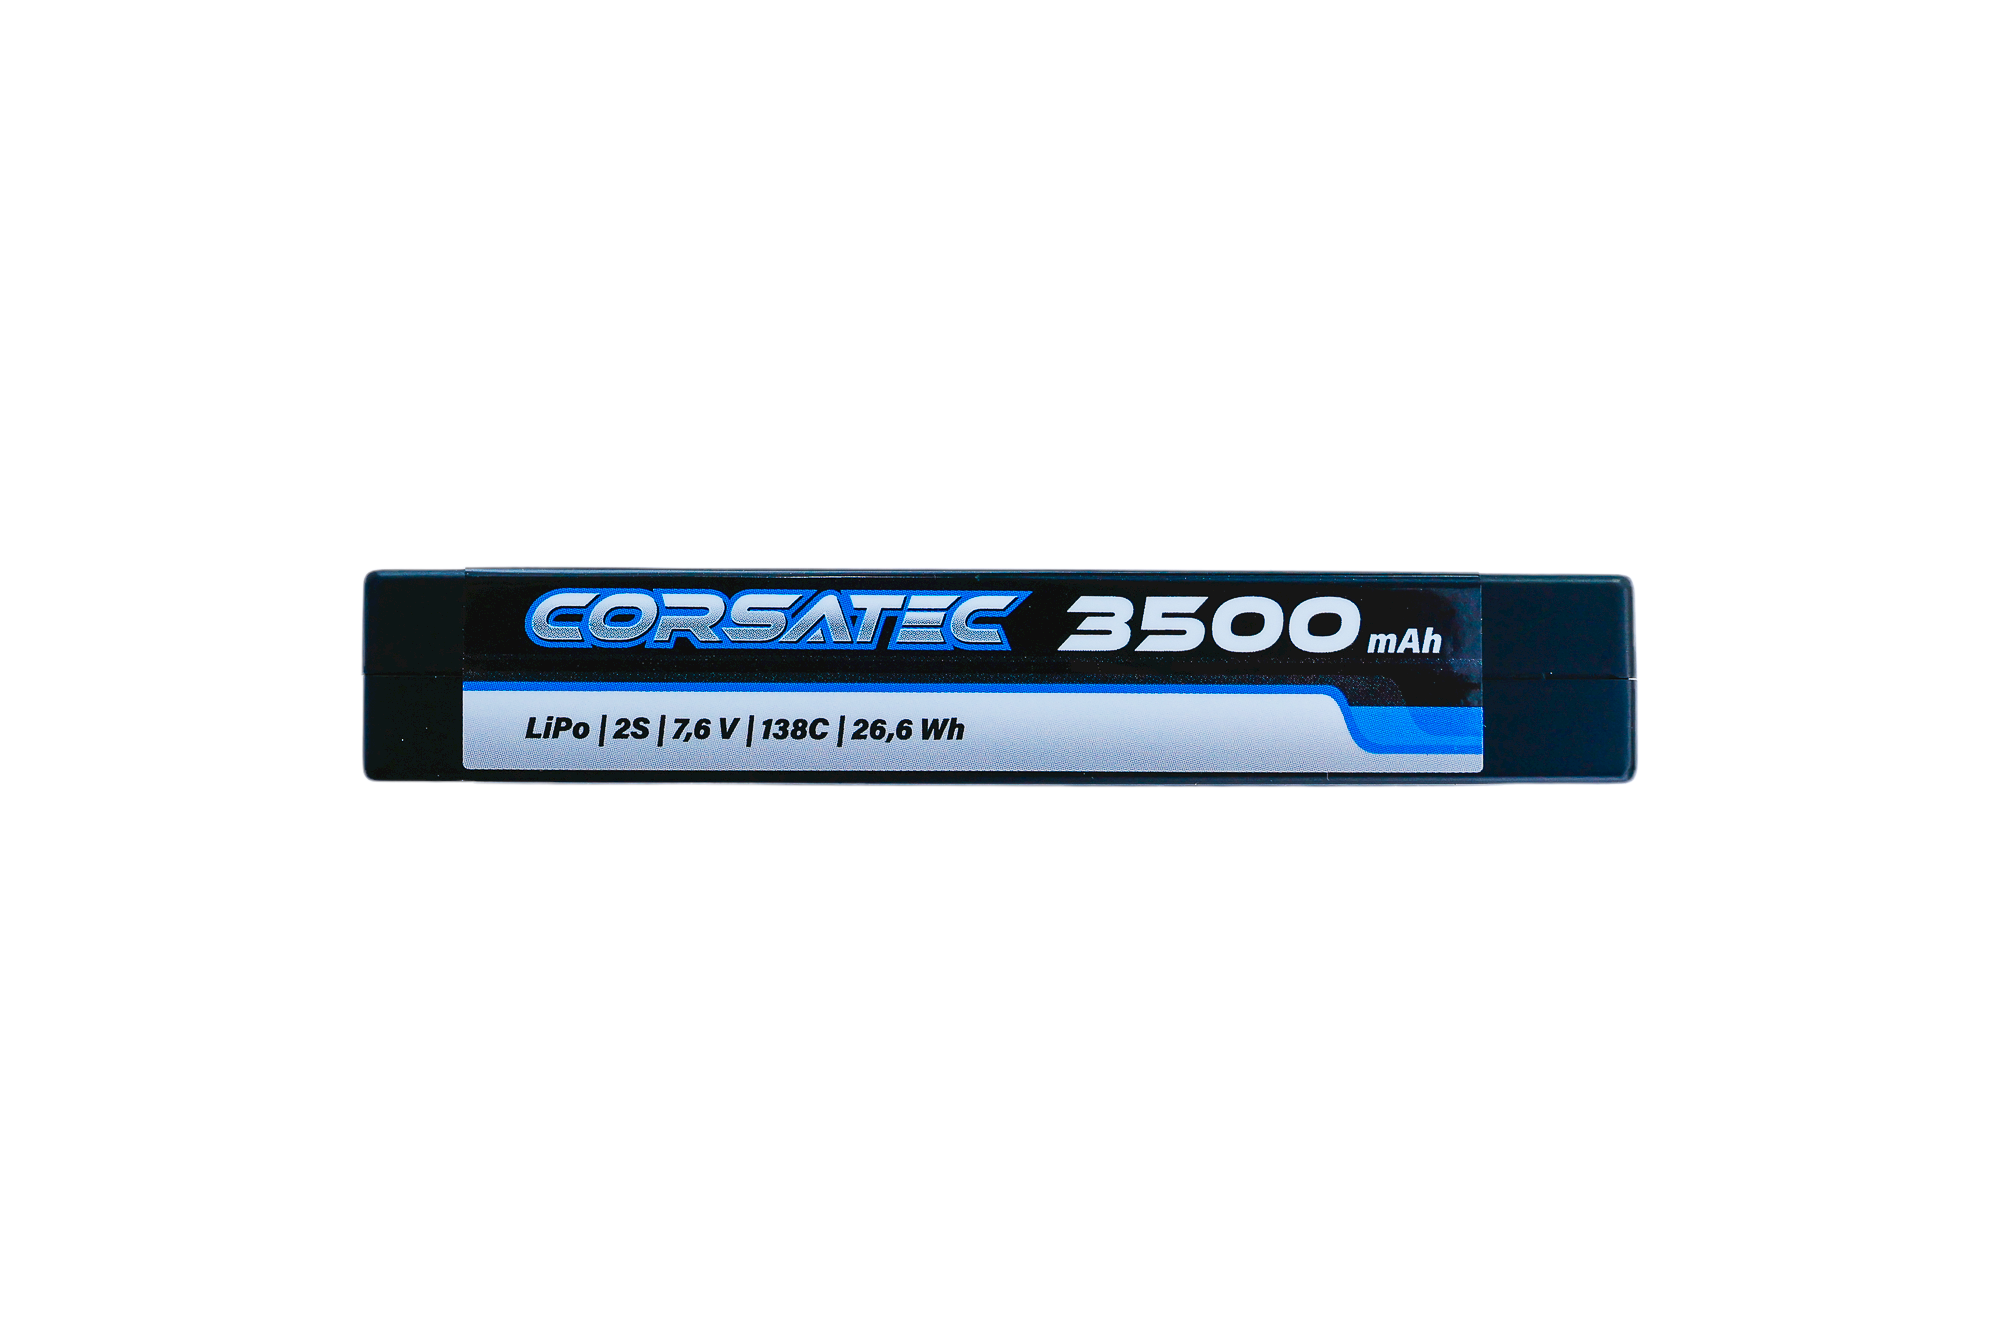 Corsatec Lipo 2s Shorty XLCG 3500mah Graphene HV+ CT10004